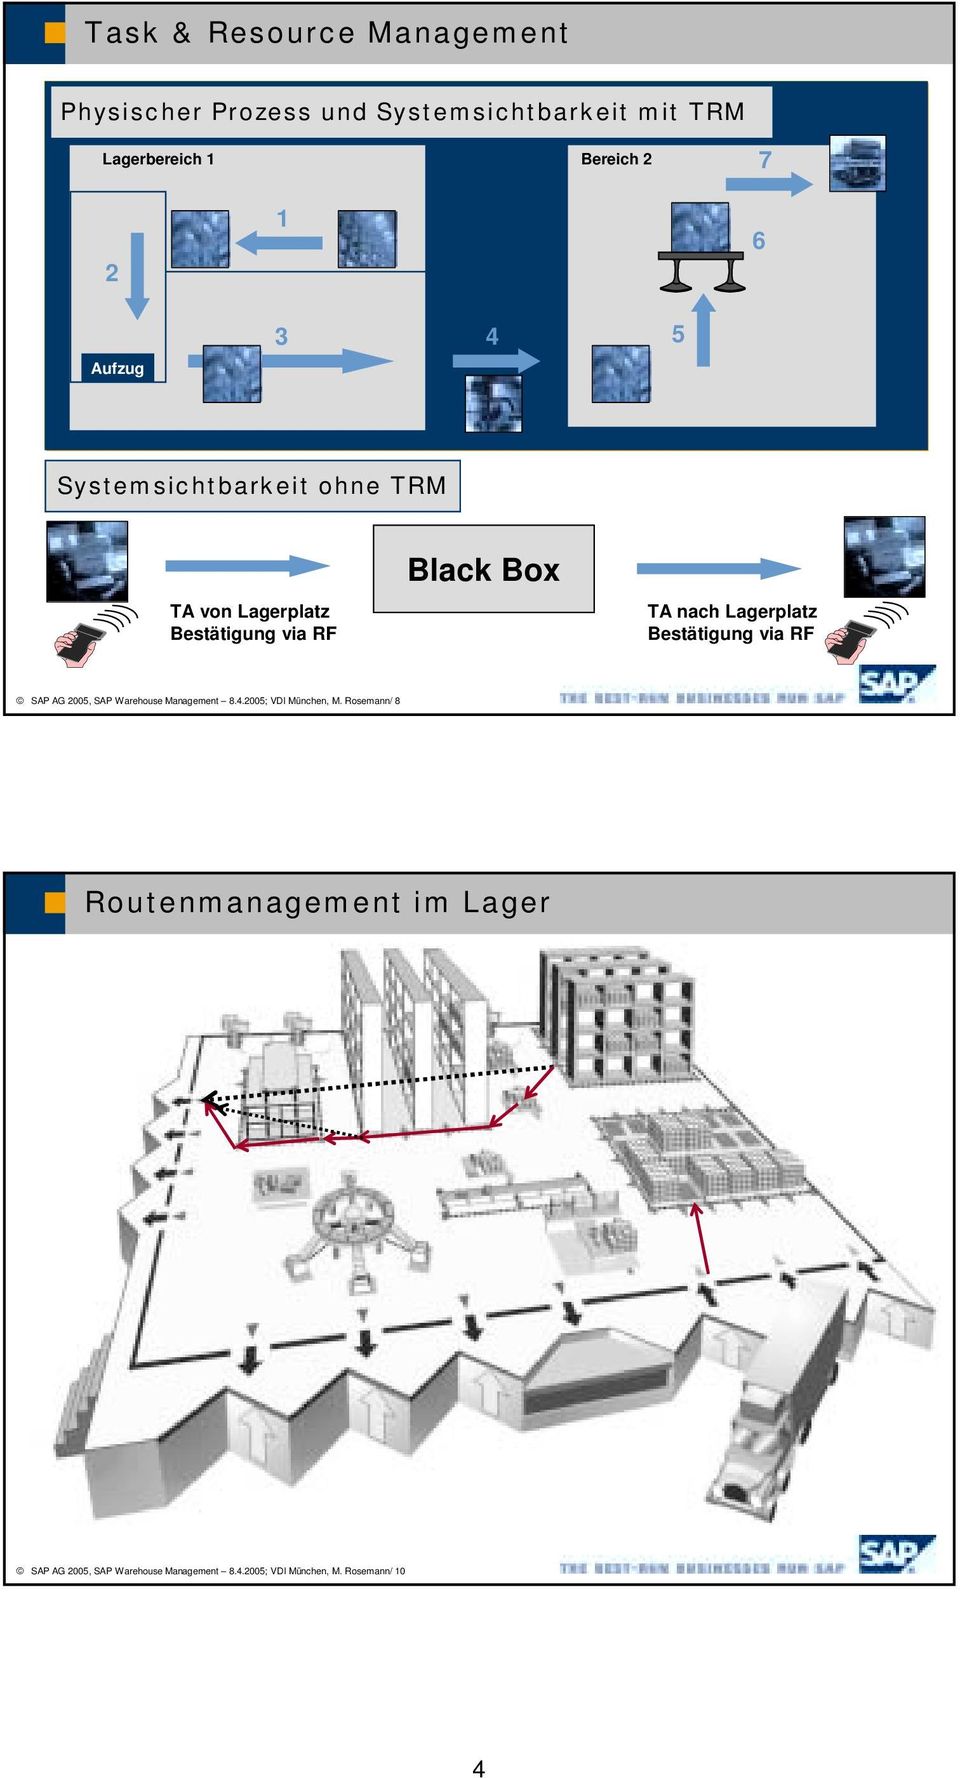 Lagerplatz Bestätigung via RF SAP AG 2005, SAP Warehouse Management 8.4.2005; VDI München, M.